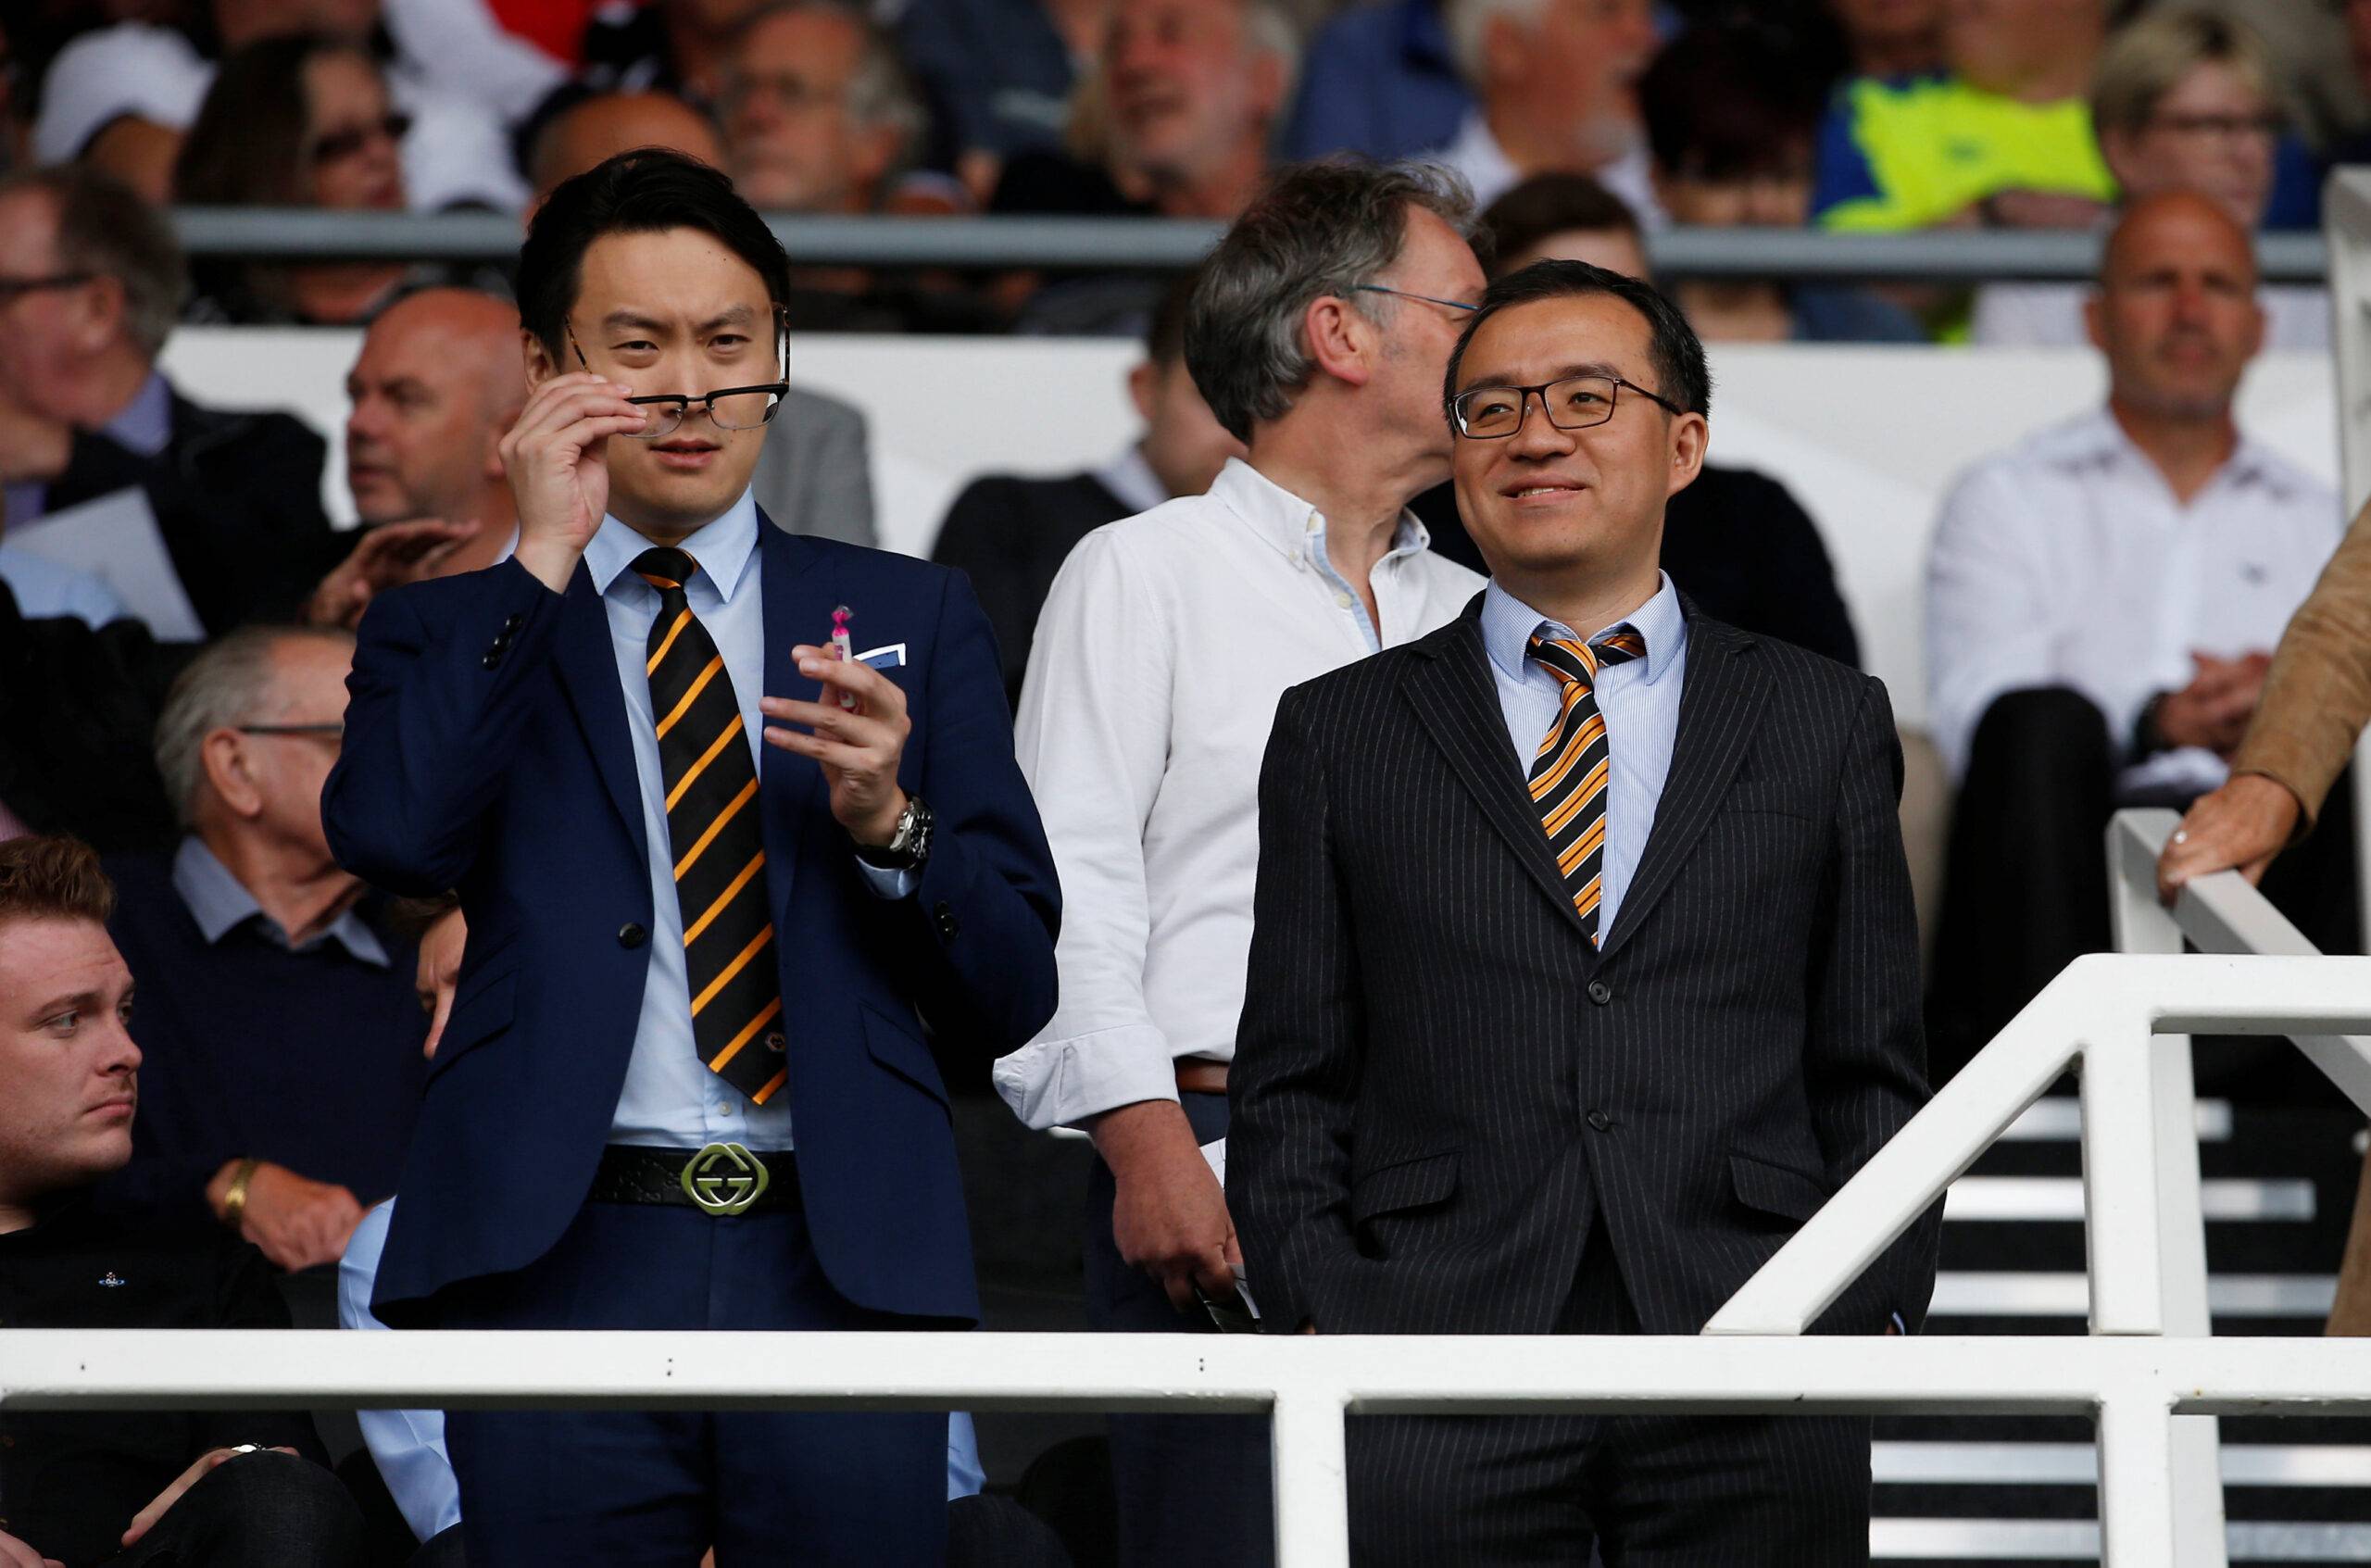 Wolverhampton Wanderers chairman Jeff Shi watches on